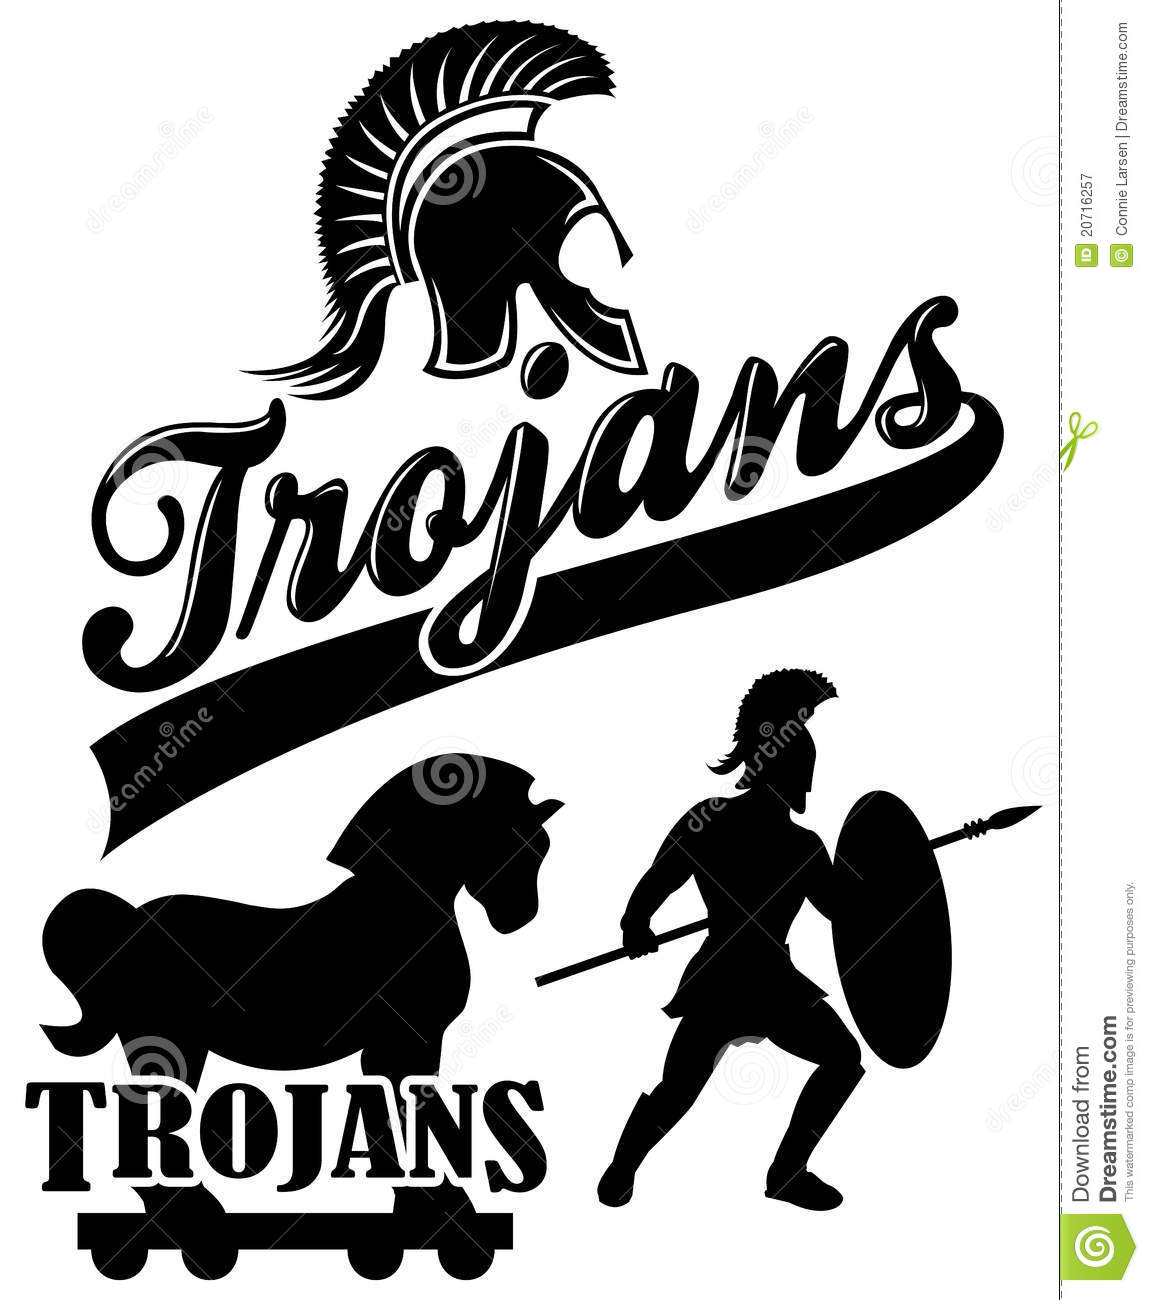 Trojan Team Mascot Eps Royalty Free Stock Photography   Image